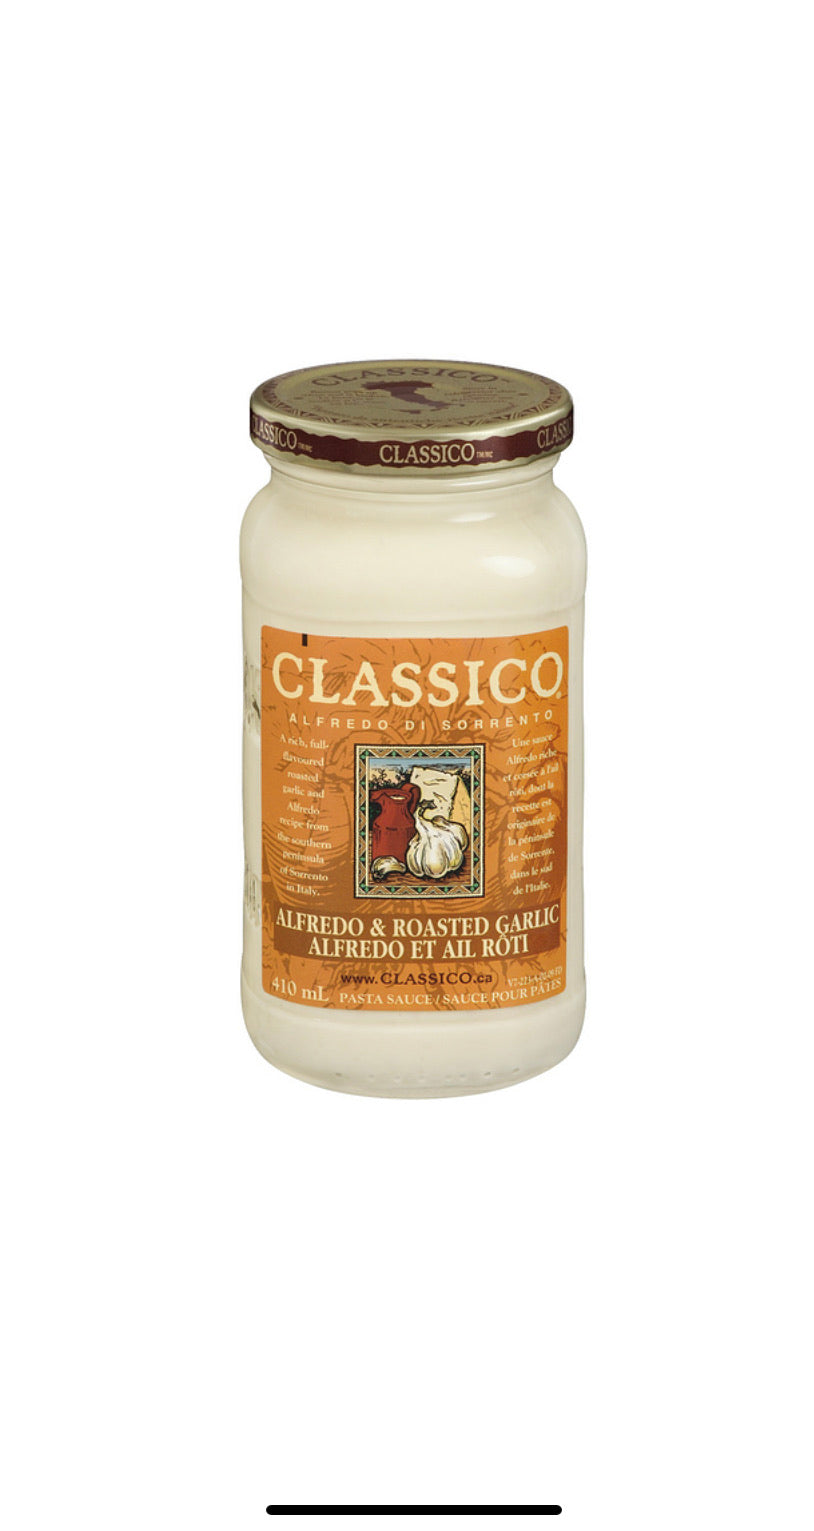 Classico Alfredo and roasted garlic pasta sauce 410 ml